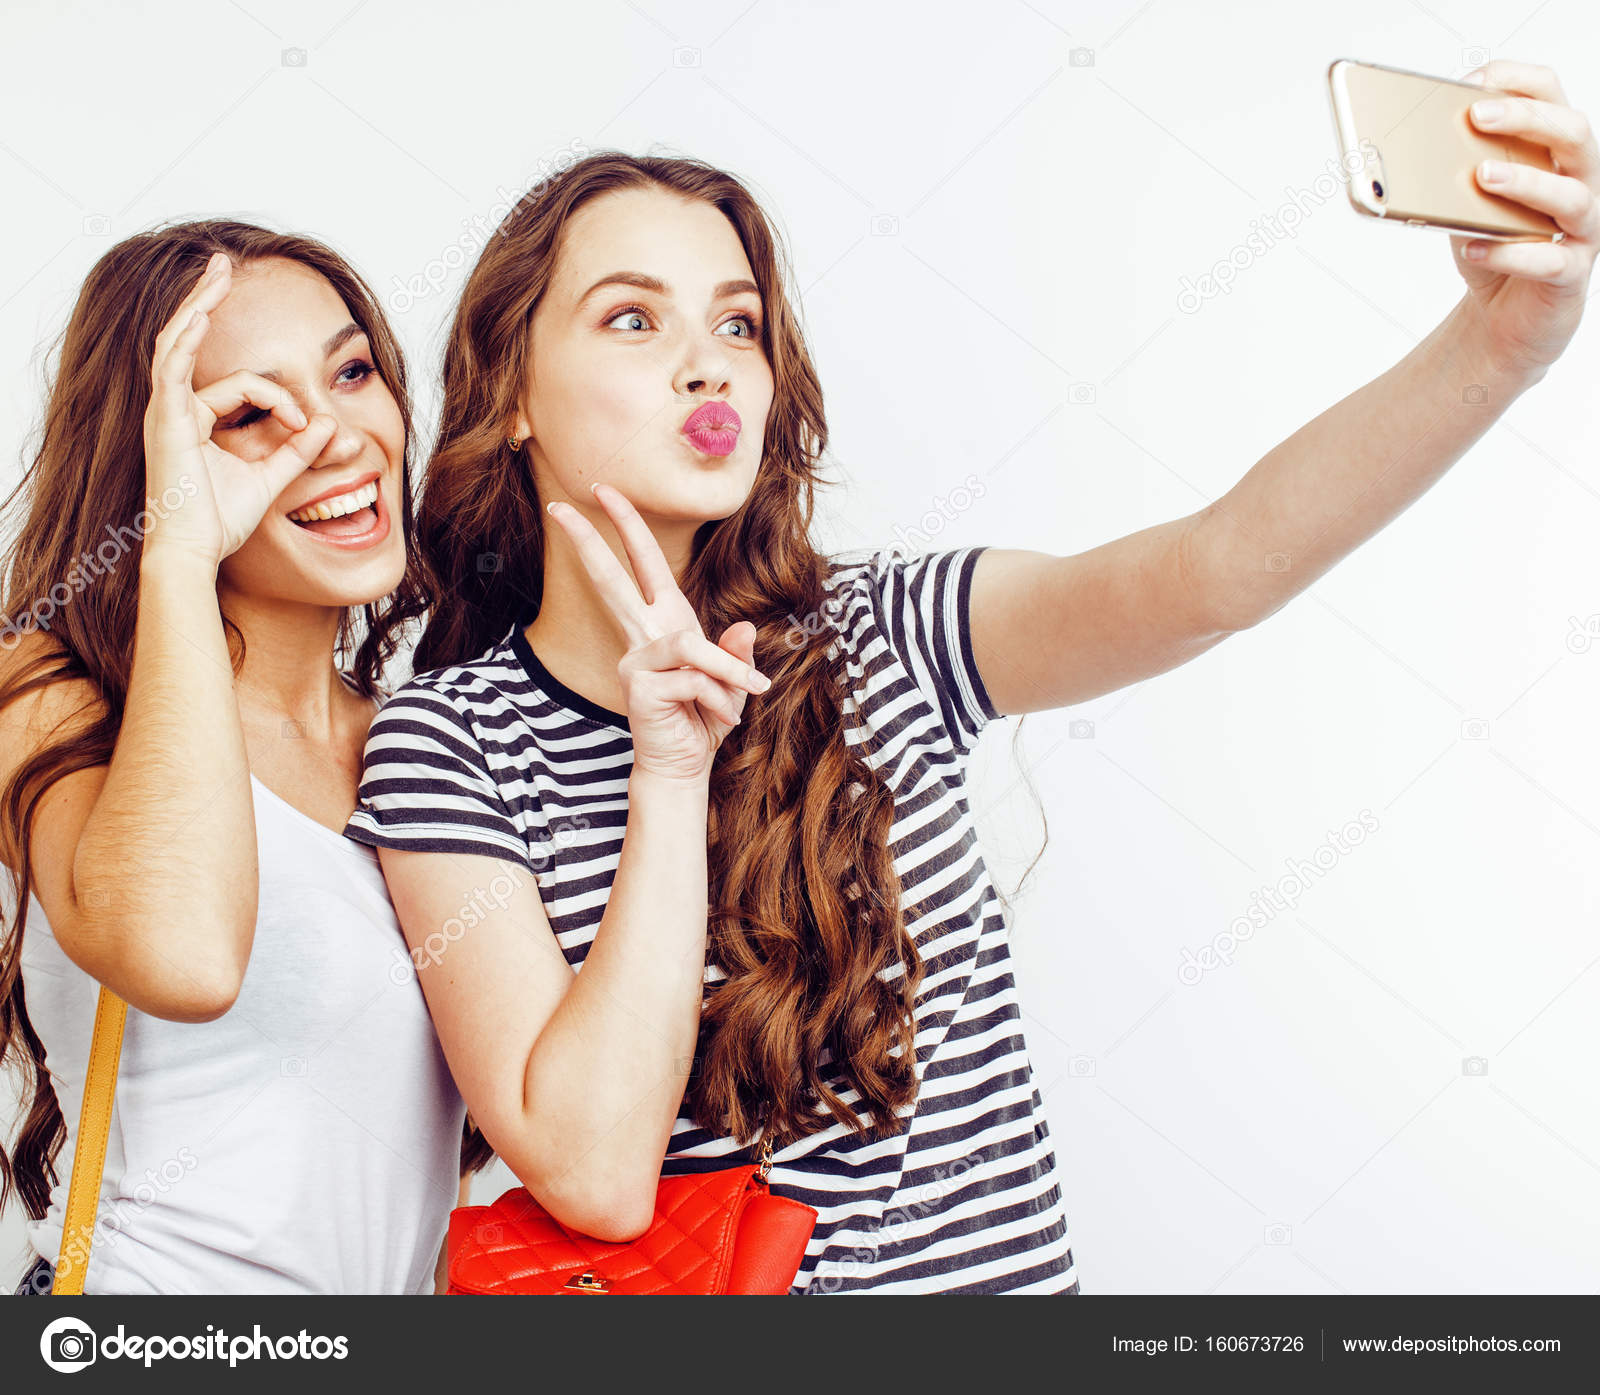 Posing 'cute' 😌 #flatmates #friends #weekend #instagood #instagood #selfie  #photography #photooftheday #love #hyderabad | Instagram